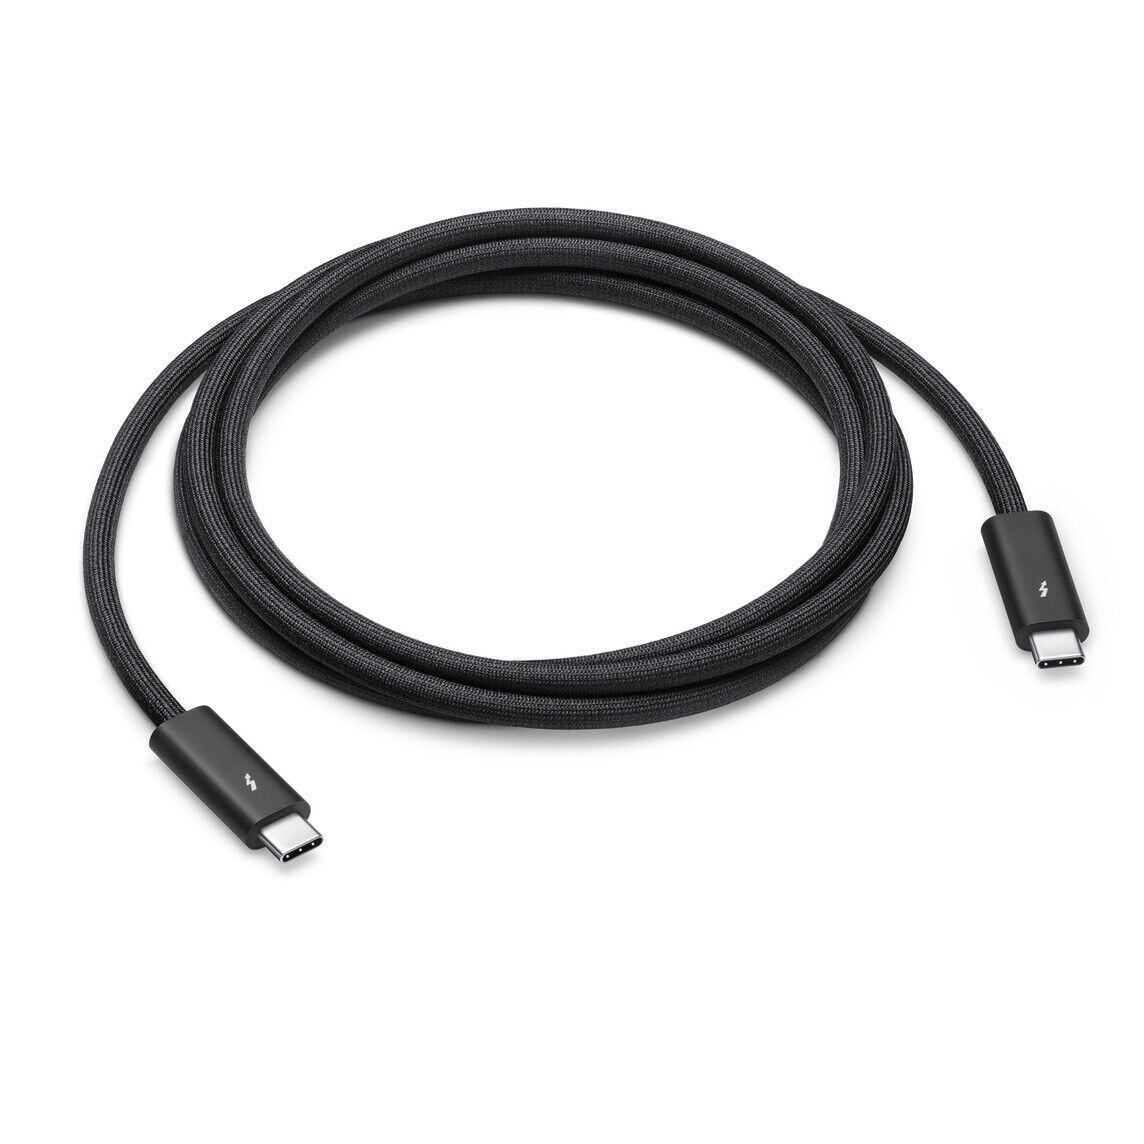 Apple Thunderbolt 4 Pro Cable - Black, 1.8m